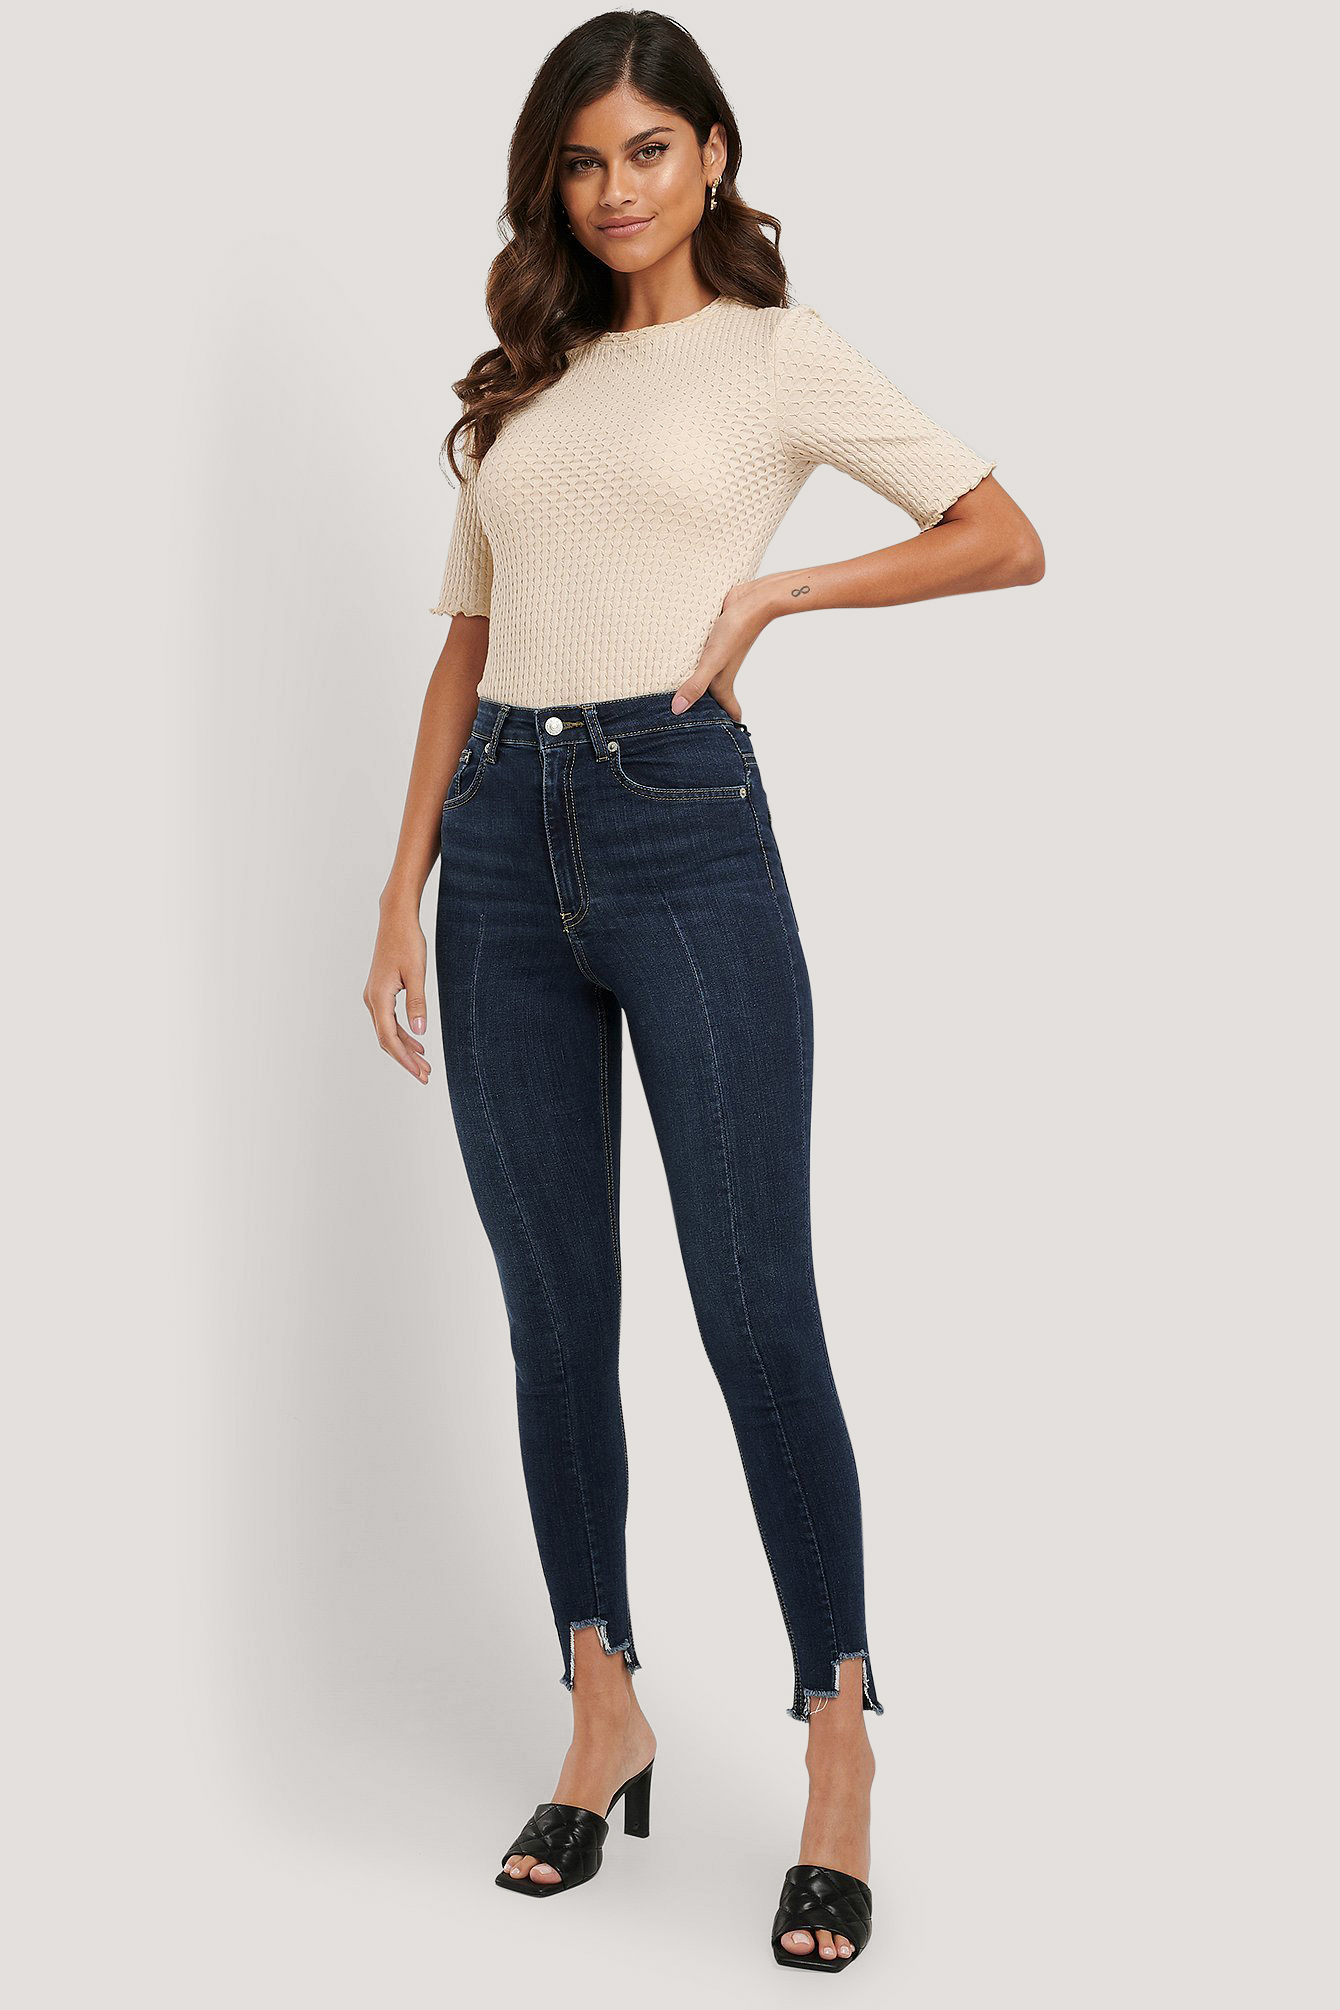 jeans extra high waist